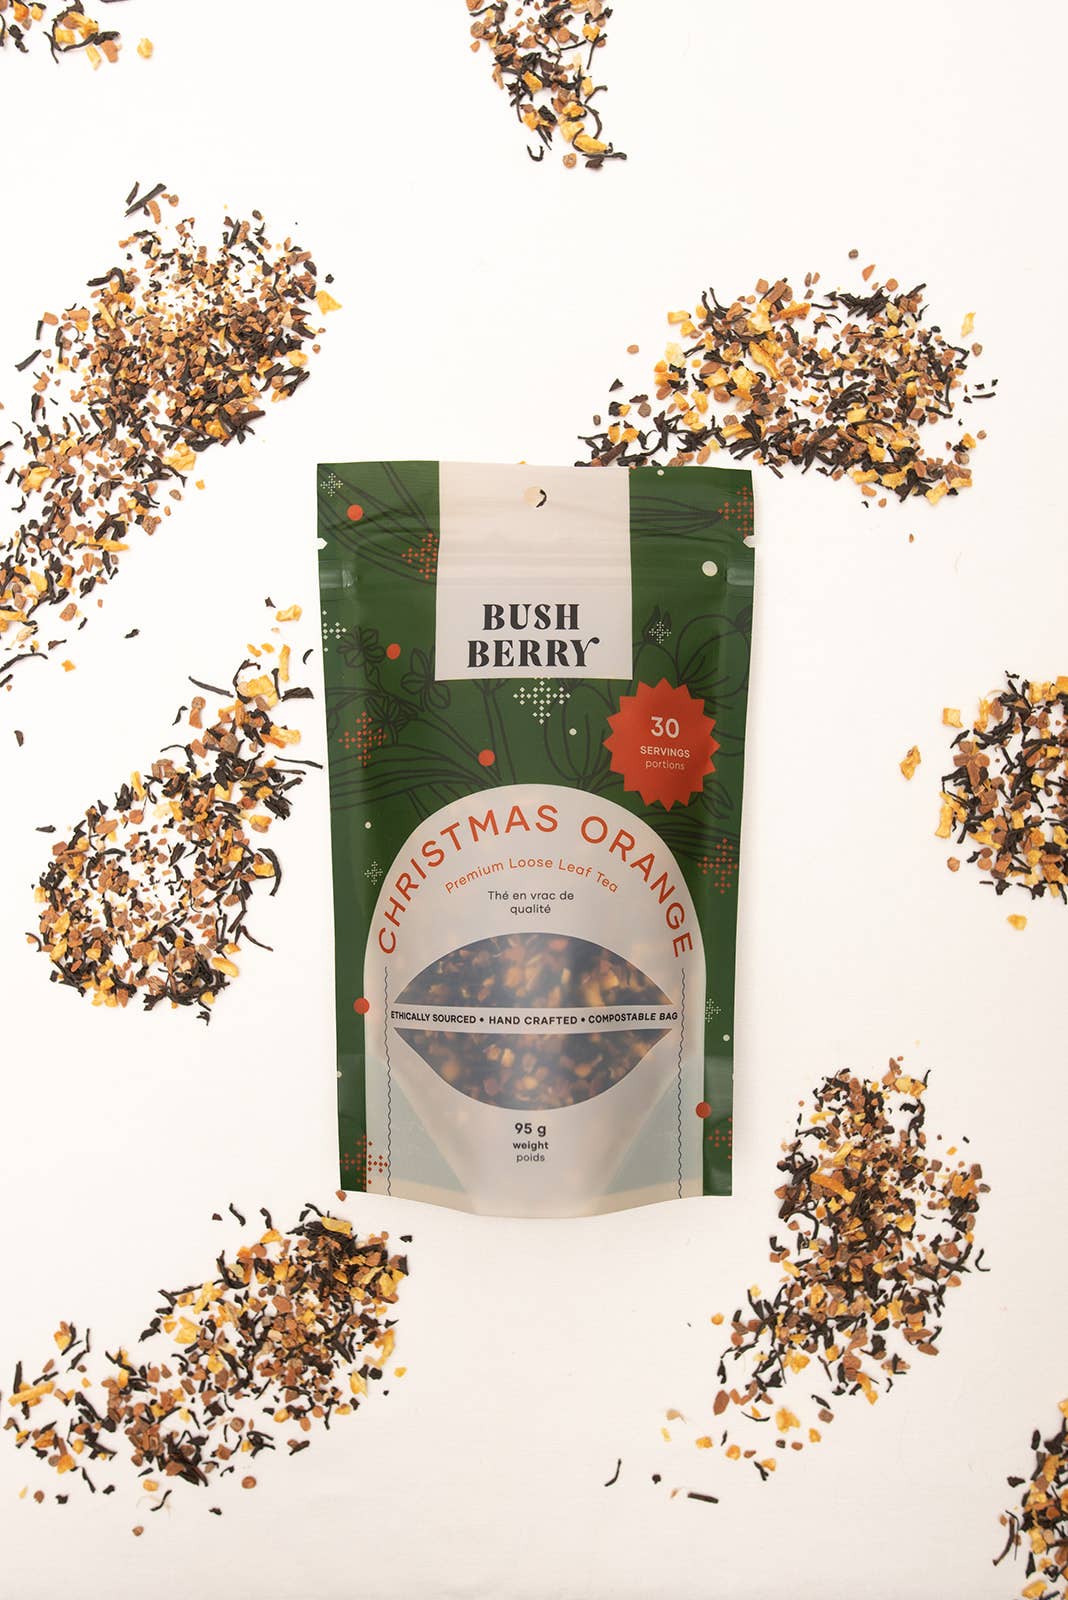 Bush Berry - Christmas Orange  | Organic, ethical source, loose leaf tea